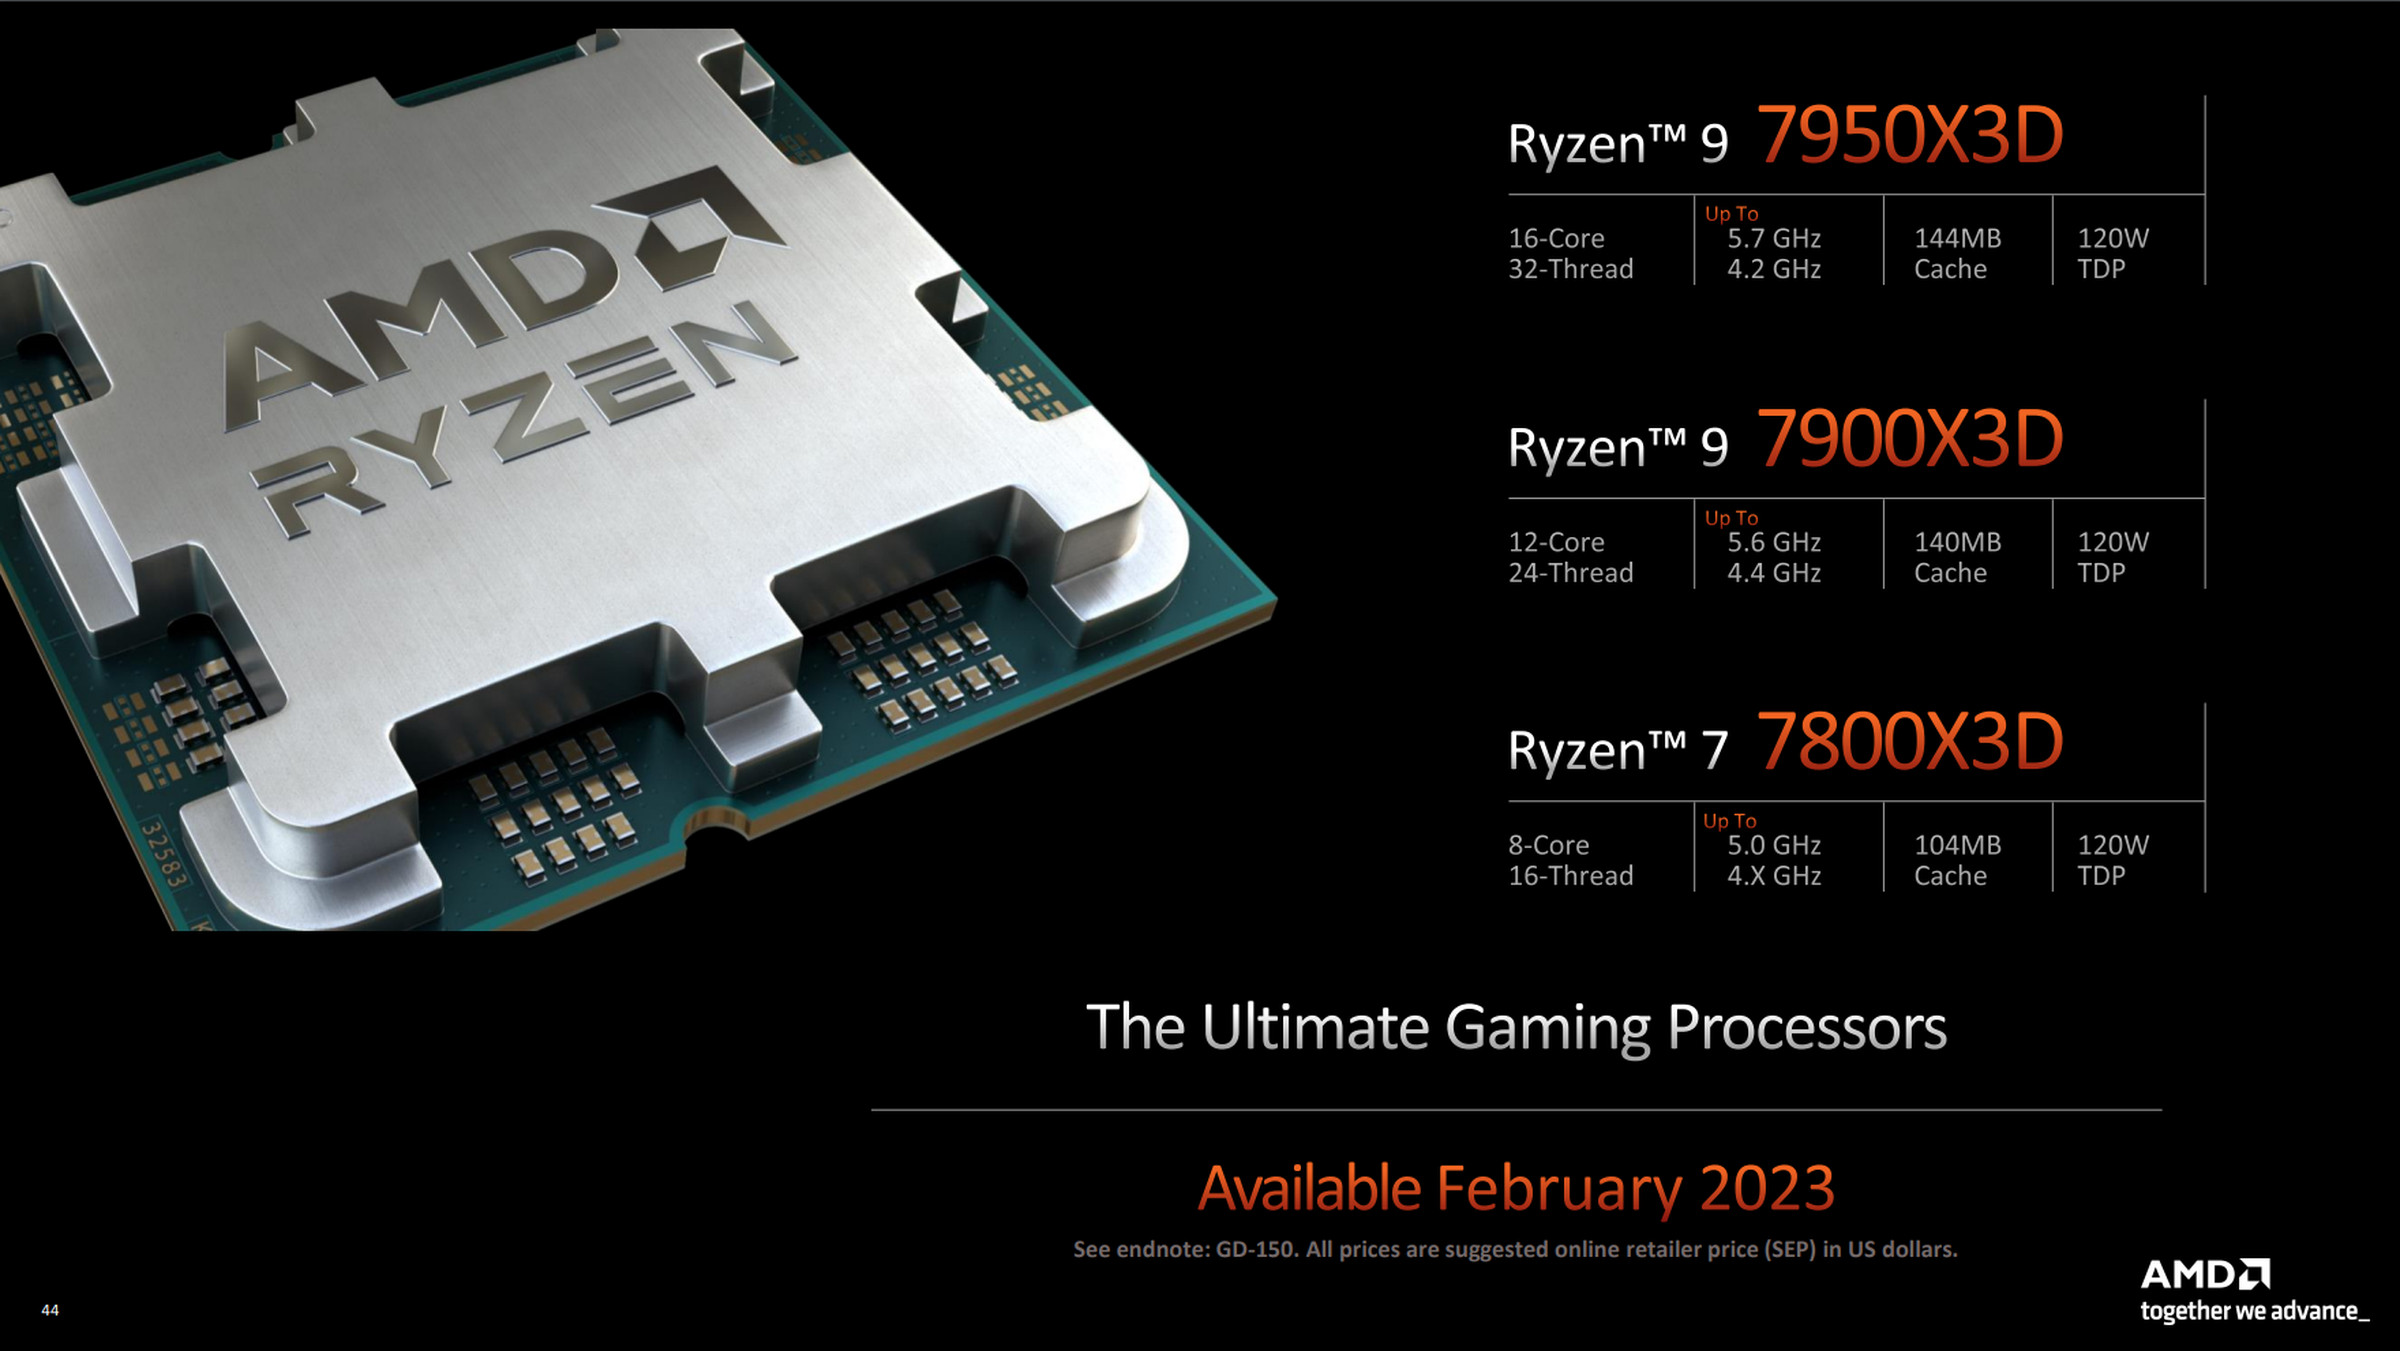 AMD’s Ryzen 7000 3D lineup for 2023.